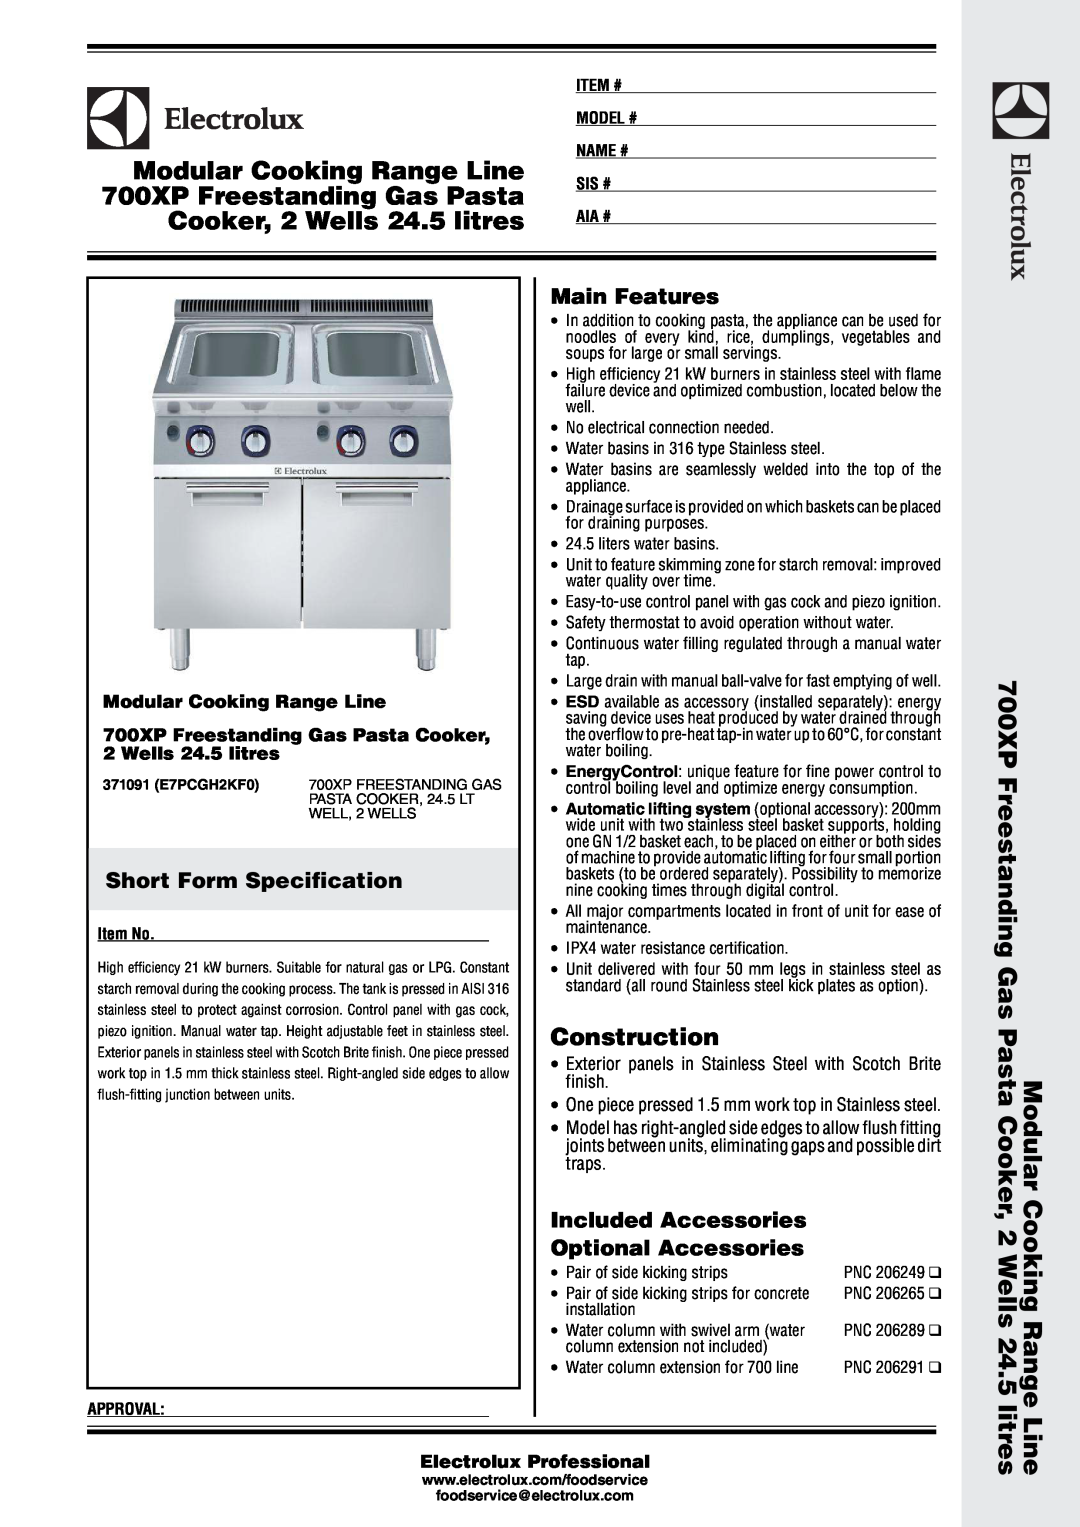 Electrolux manual Modular Cooking Range Line, 700XP Freestanding Gas Pasta Cooker, Wells 24.5 litres, Construction 